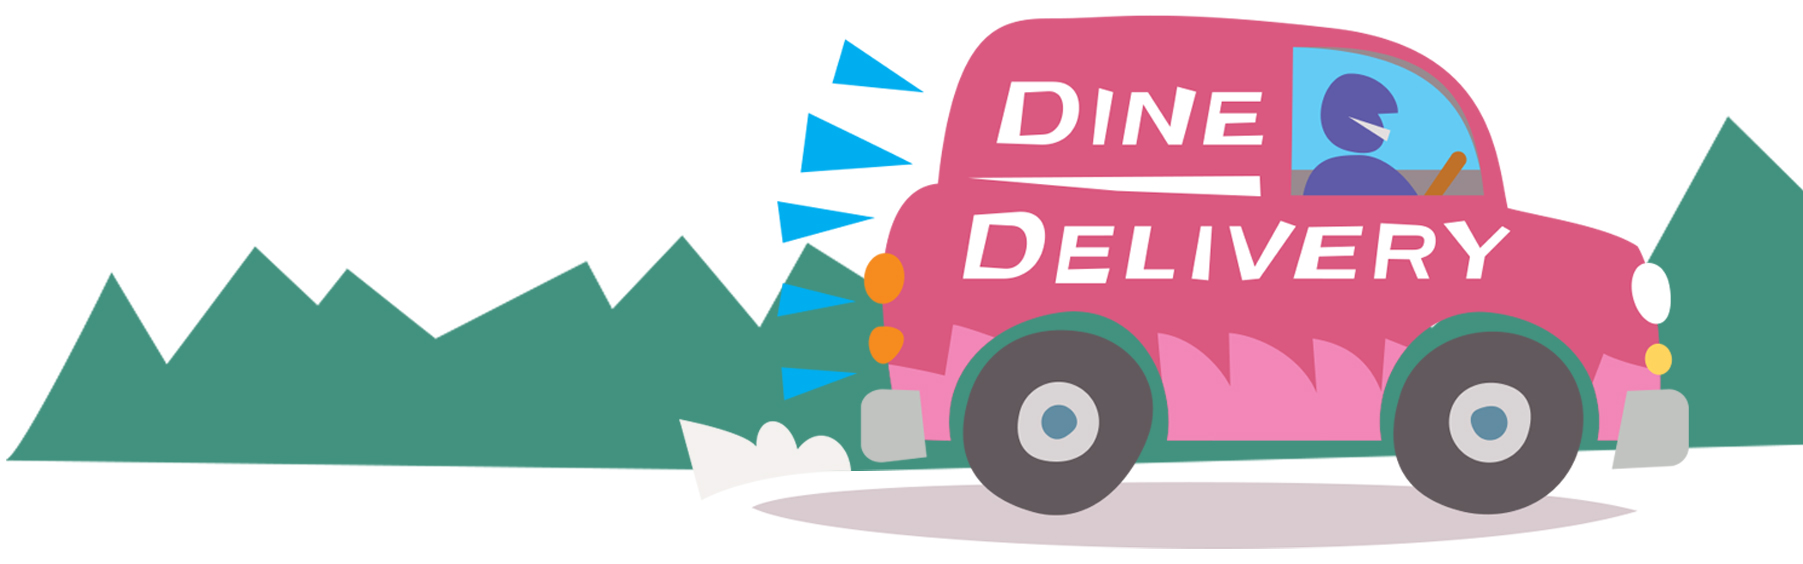 illustration of a van reading "Dine Delivery"